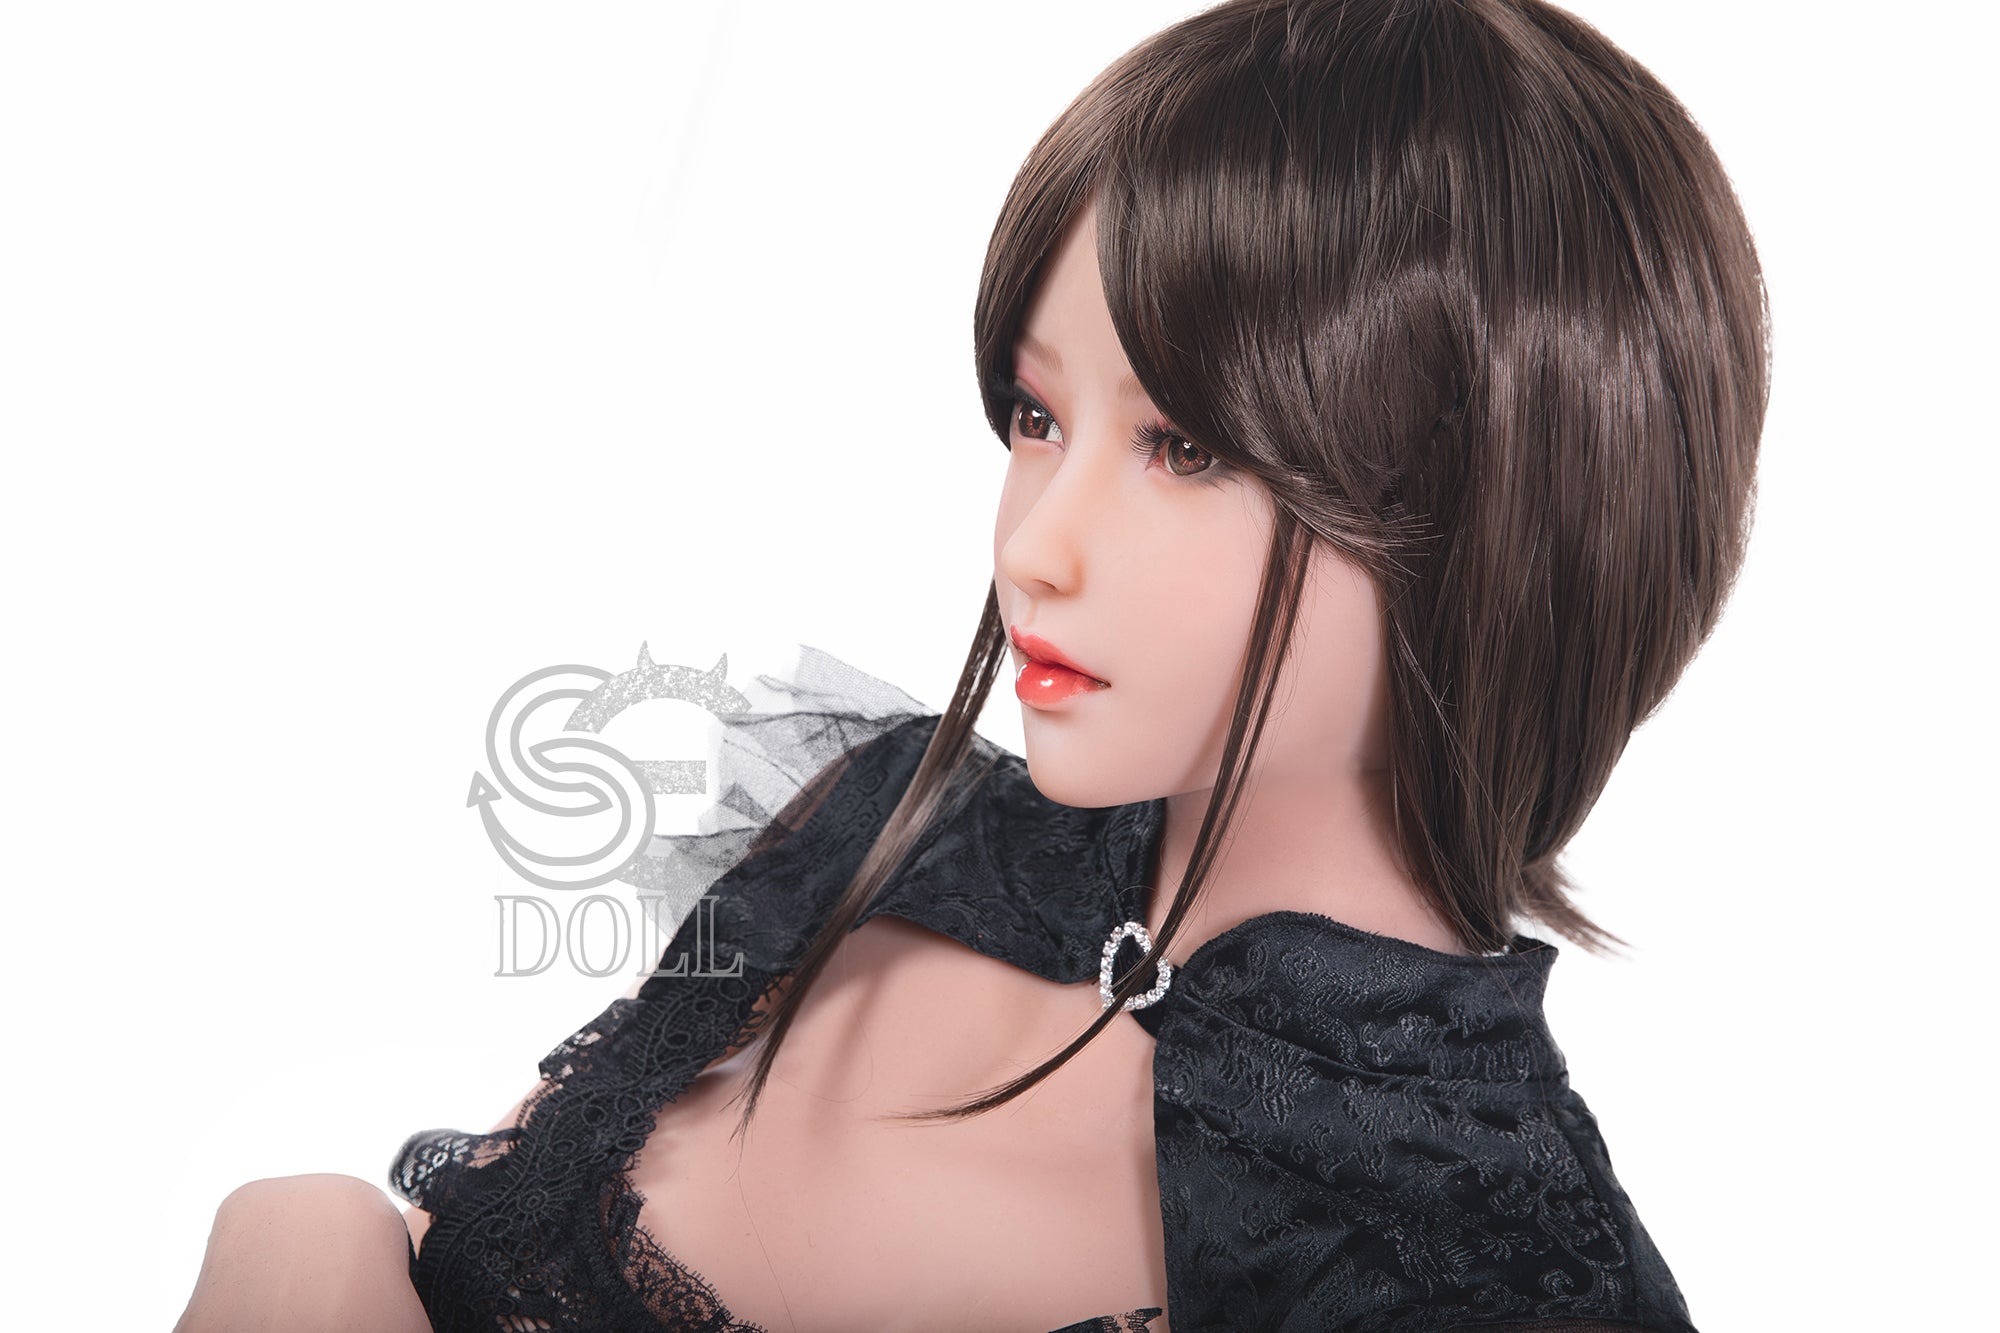 SEDOLL 161 cm F TPE - Masami | Buy Sex Dolls at DOLLS ACTUALLY